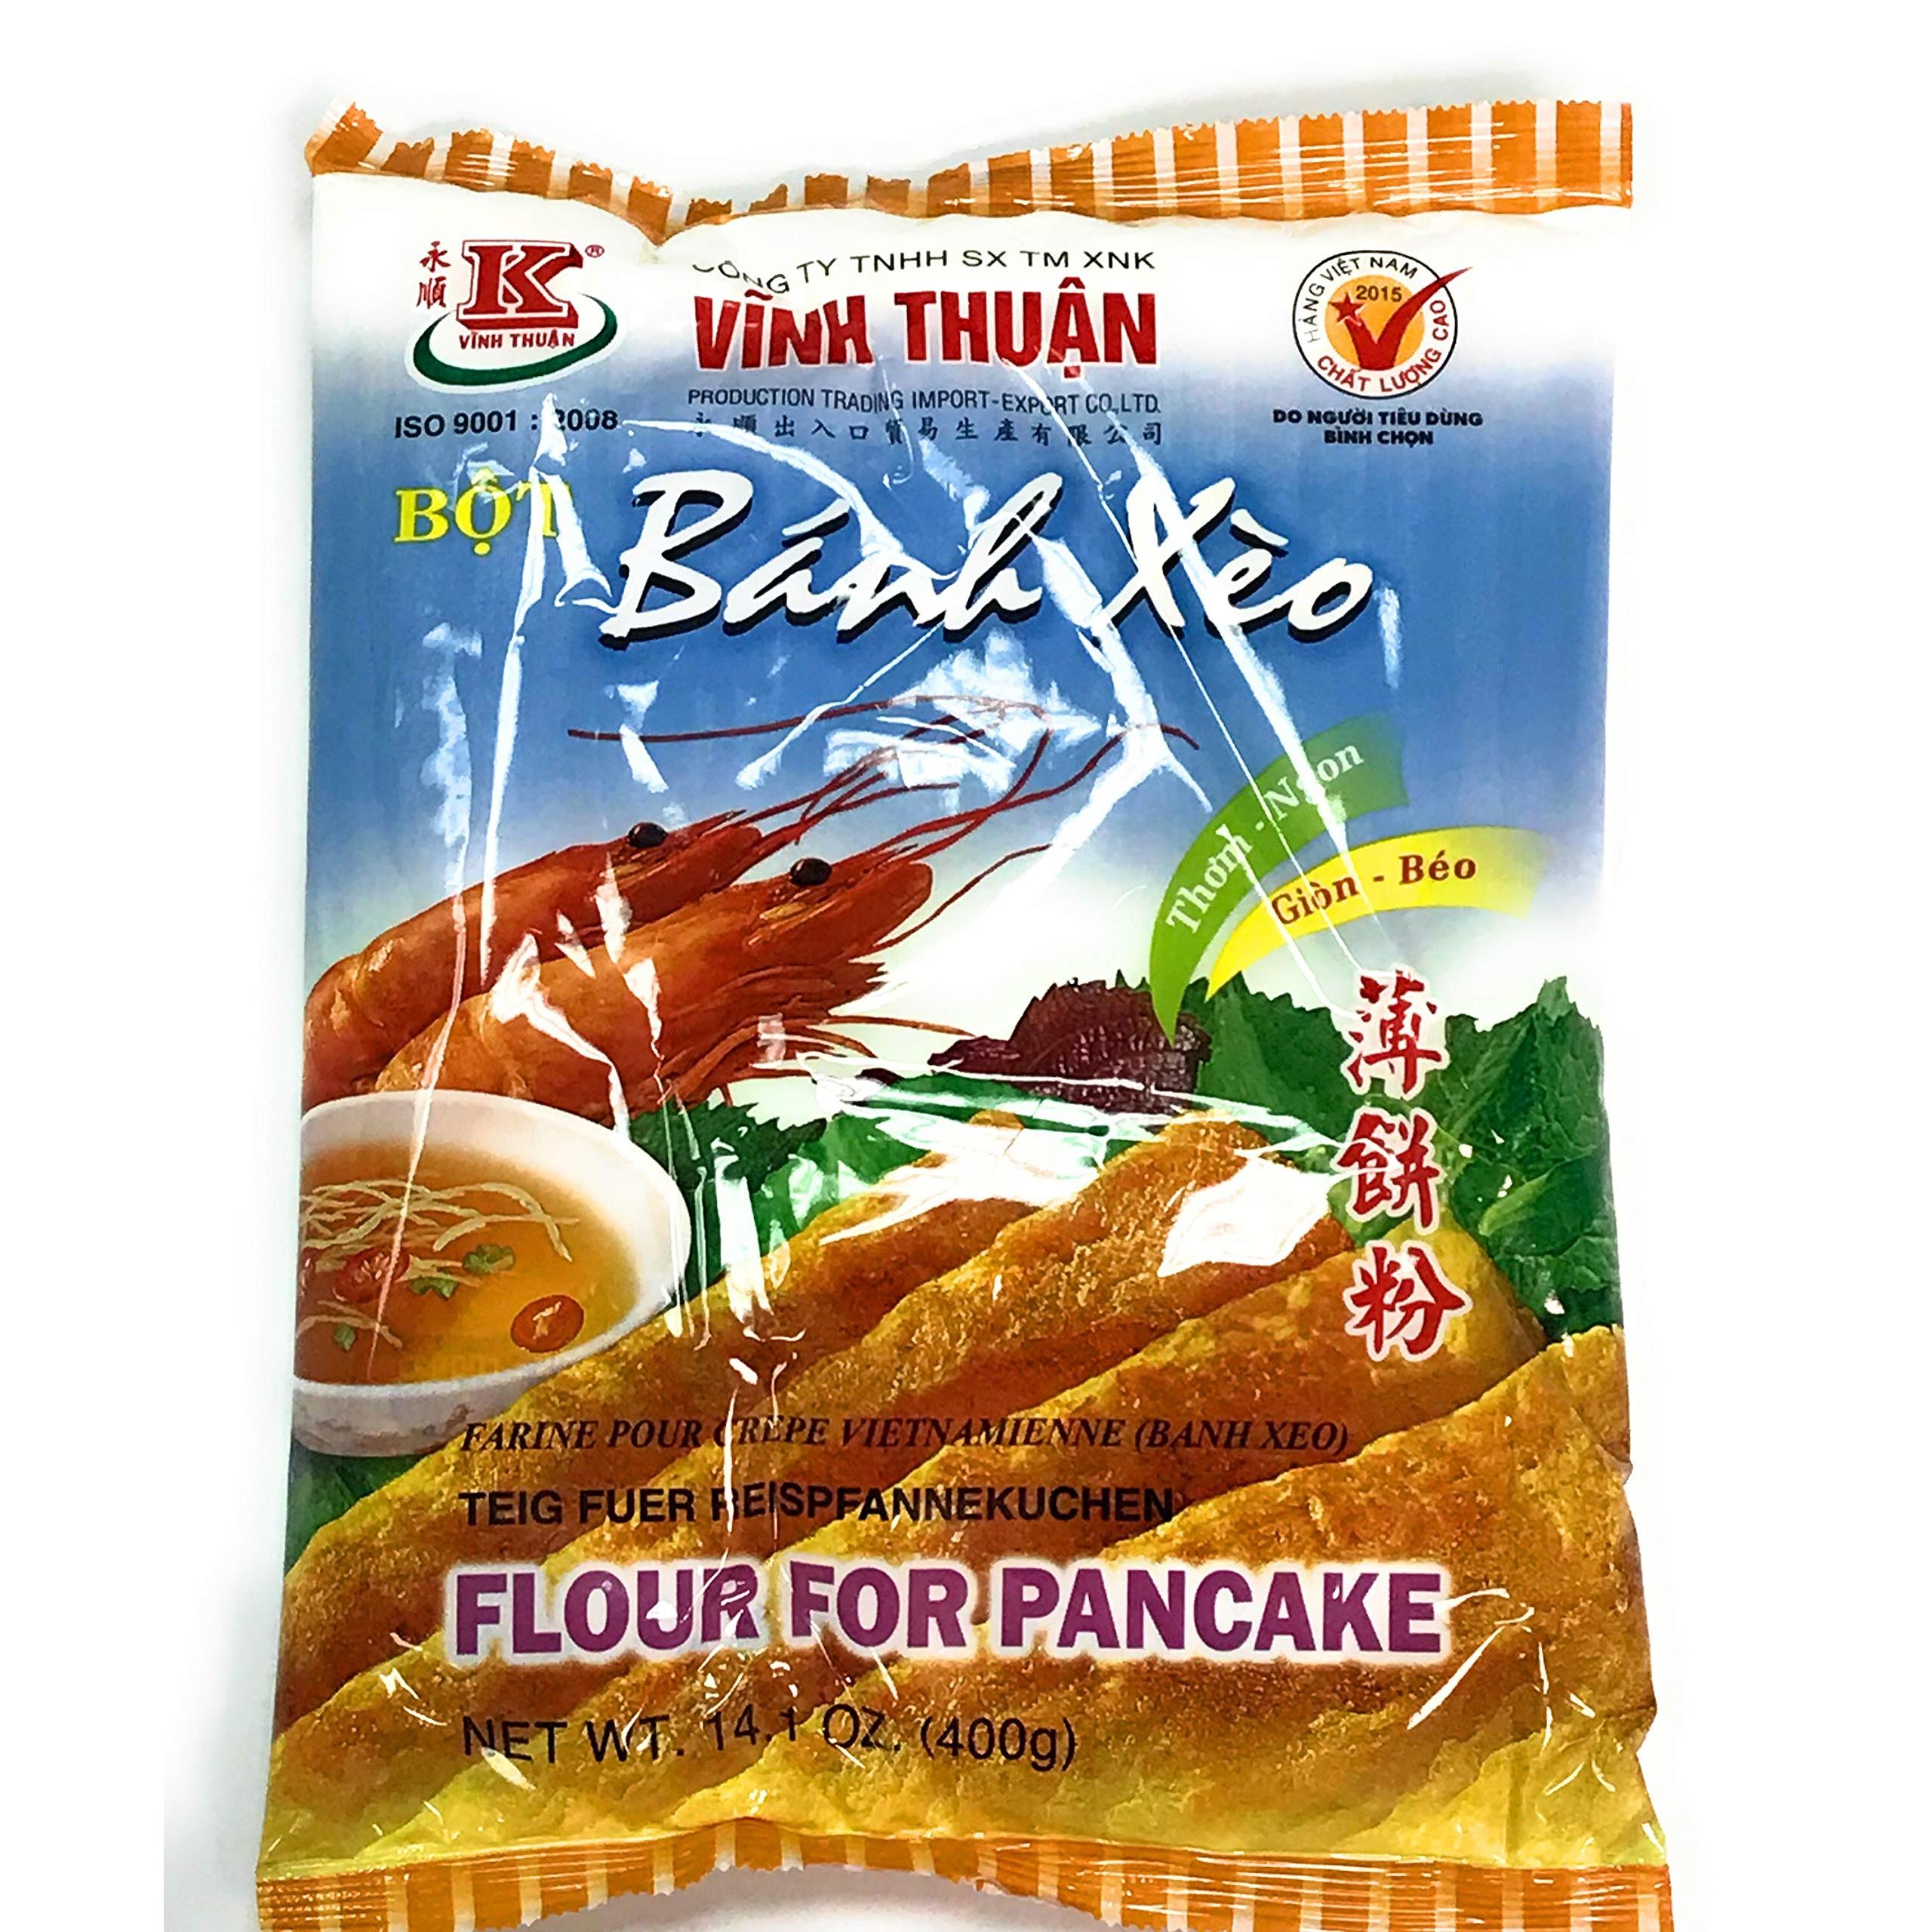 Vinh Thuan Vietnamese Pancakes Prepared Mix Flour Banh Xeo, 14.oz (3 Packs)